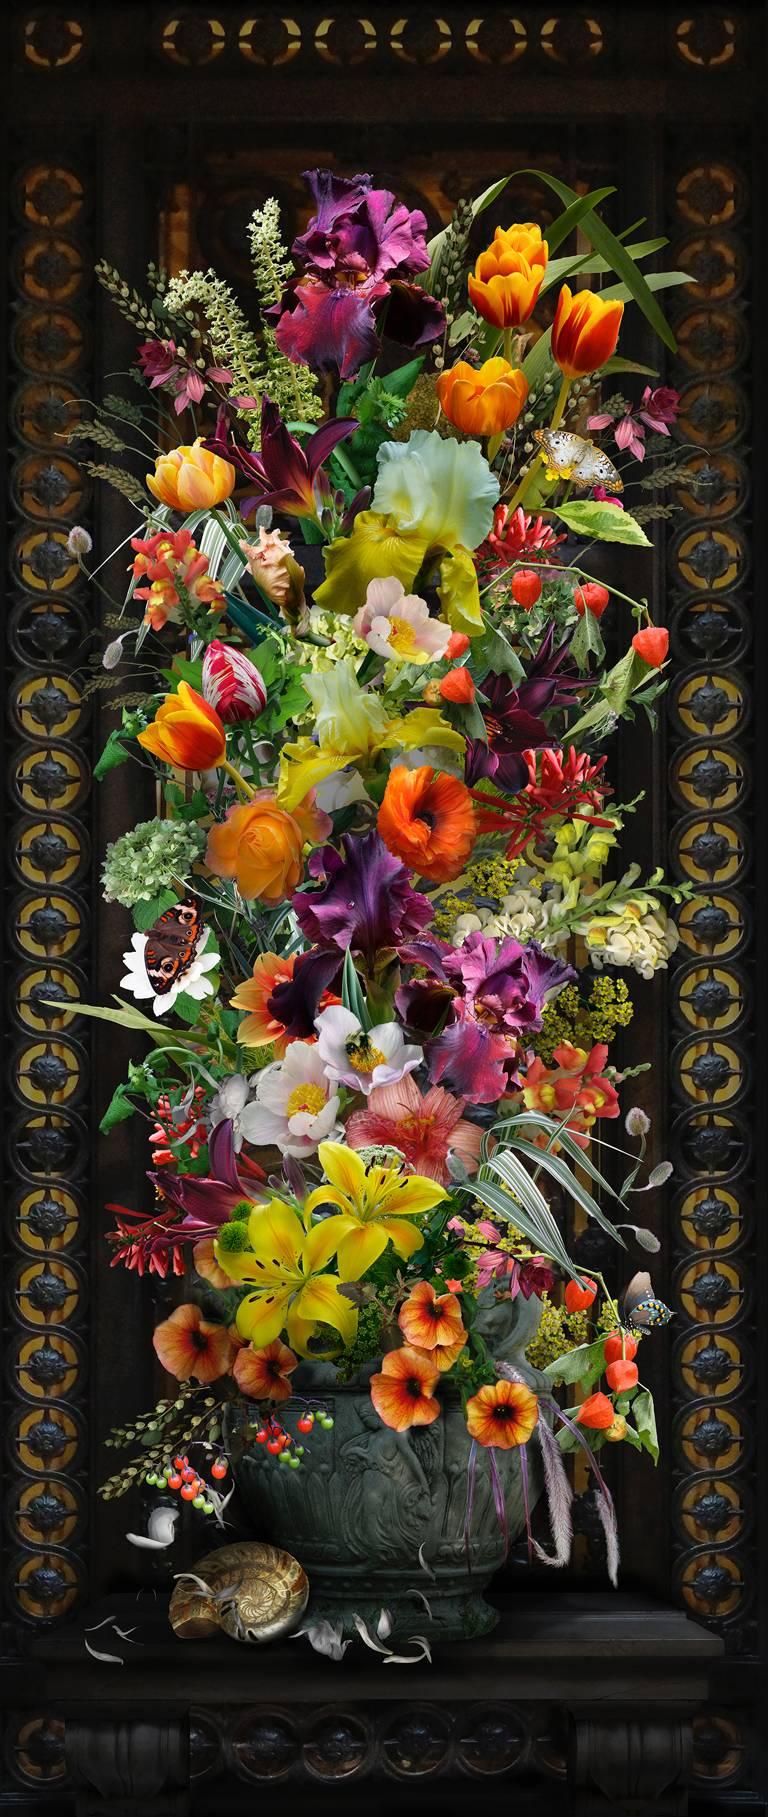 Lisa A. Frank Color Photograph – Ironwork (Vertikaler digitaler Collagedruck farbenfroher Blumen auf Schwarz)